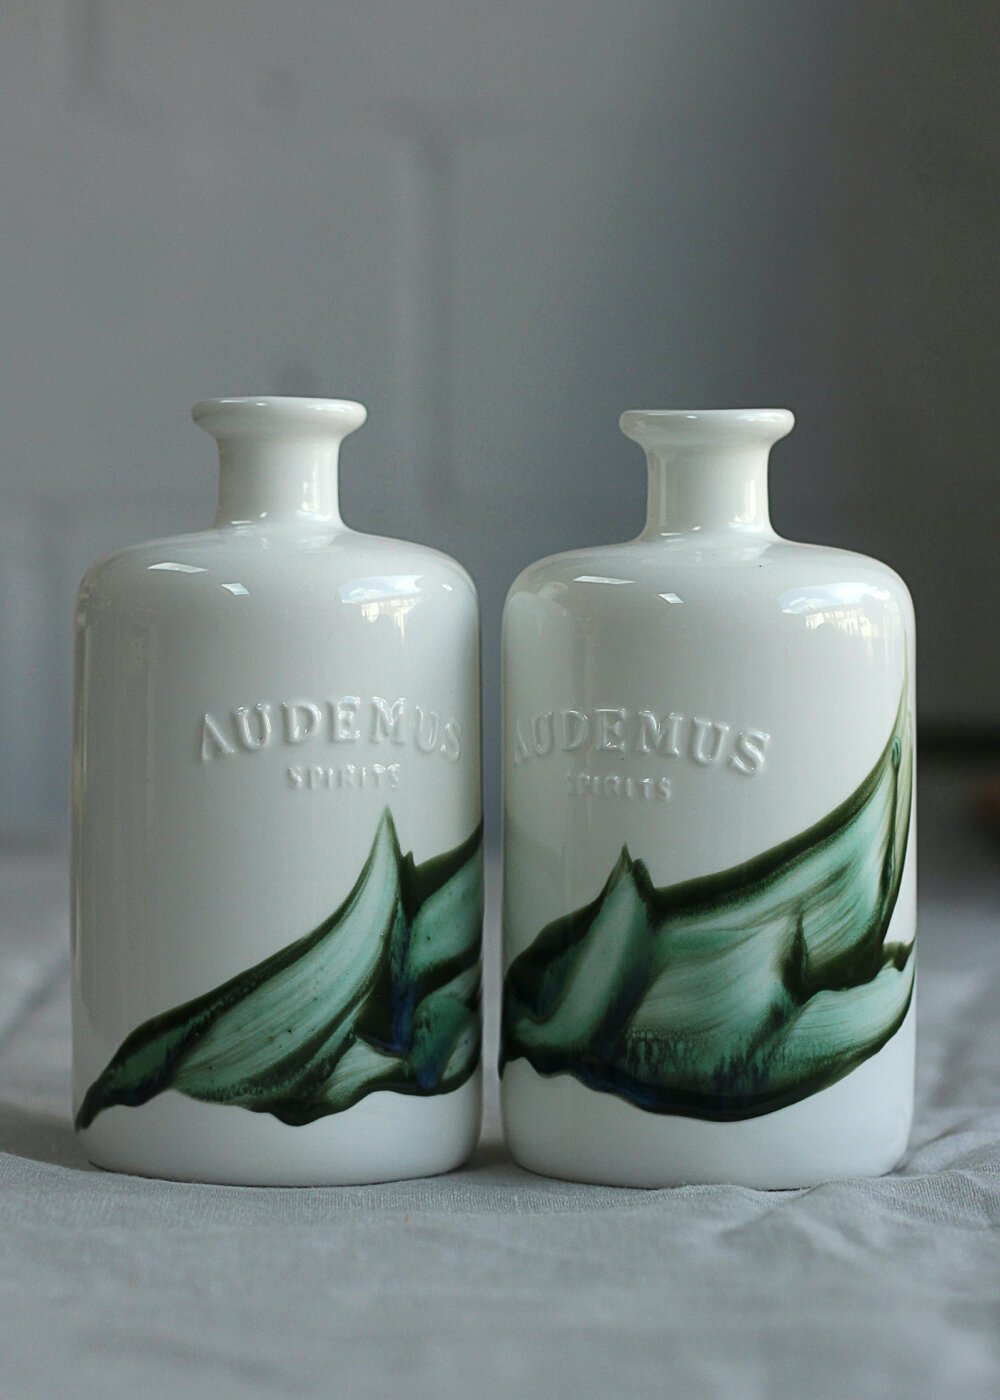 Audemus+bespoke+bottles+fine+bone+china+brushwork+glaze+green+reiko+kaneko+ceramicslow+res2.jpeg